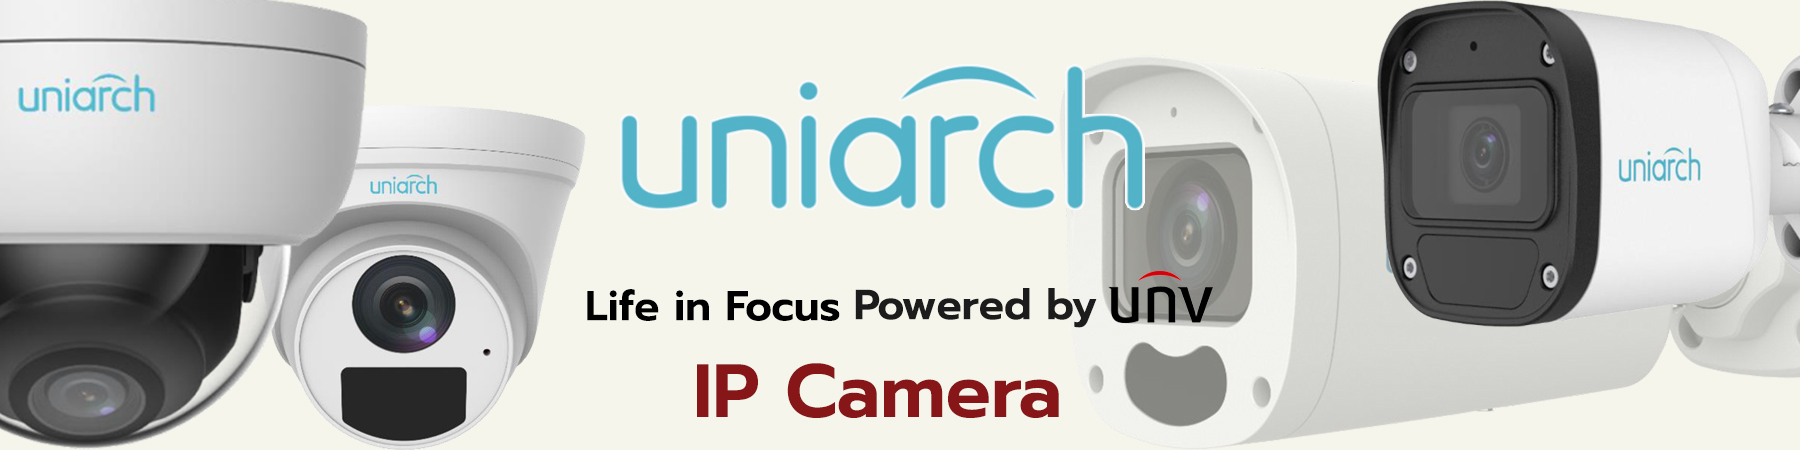 Uniarch IPC, Uniarch IP Camera, กล้องวงจรปิด Uniarch, Uniarch IPC 2MP, Uniarch IPC 4MP, Uniarch IPC 5MP